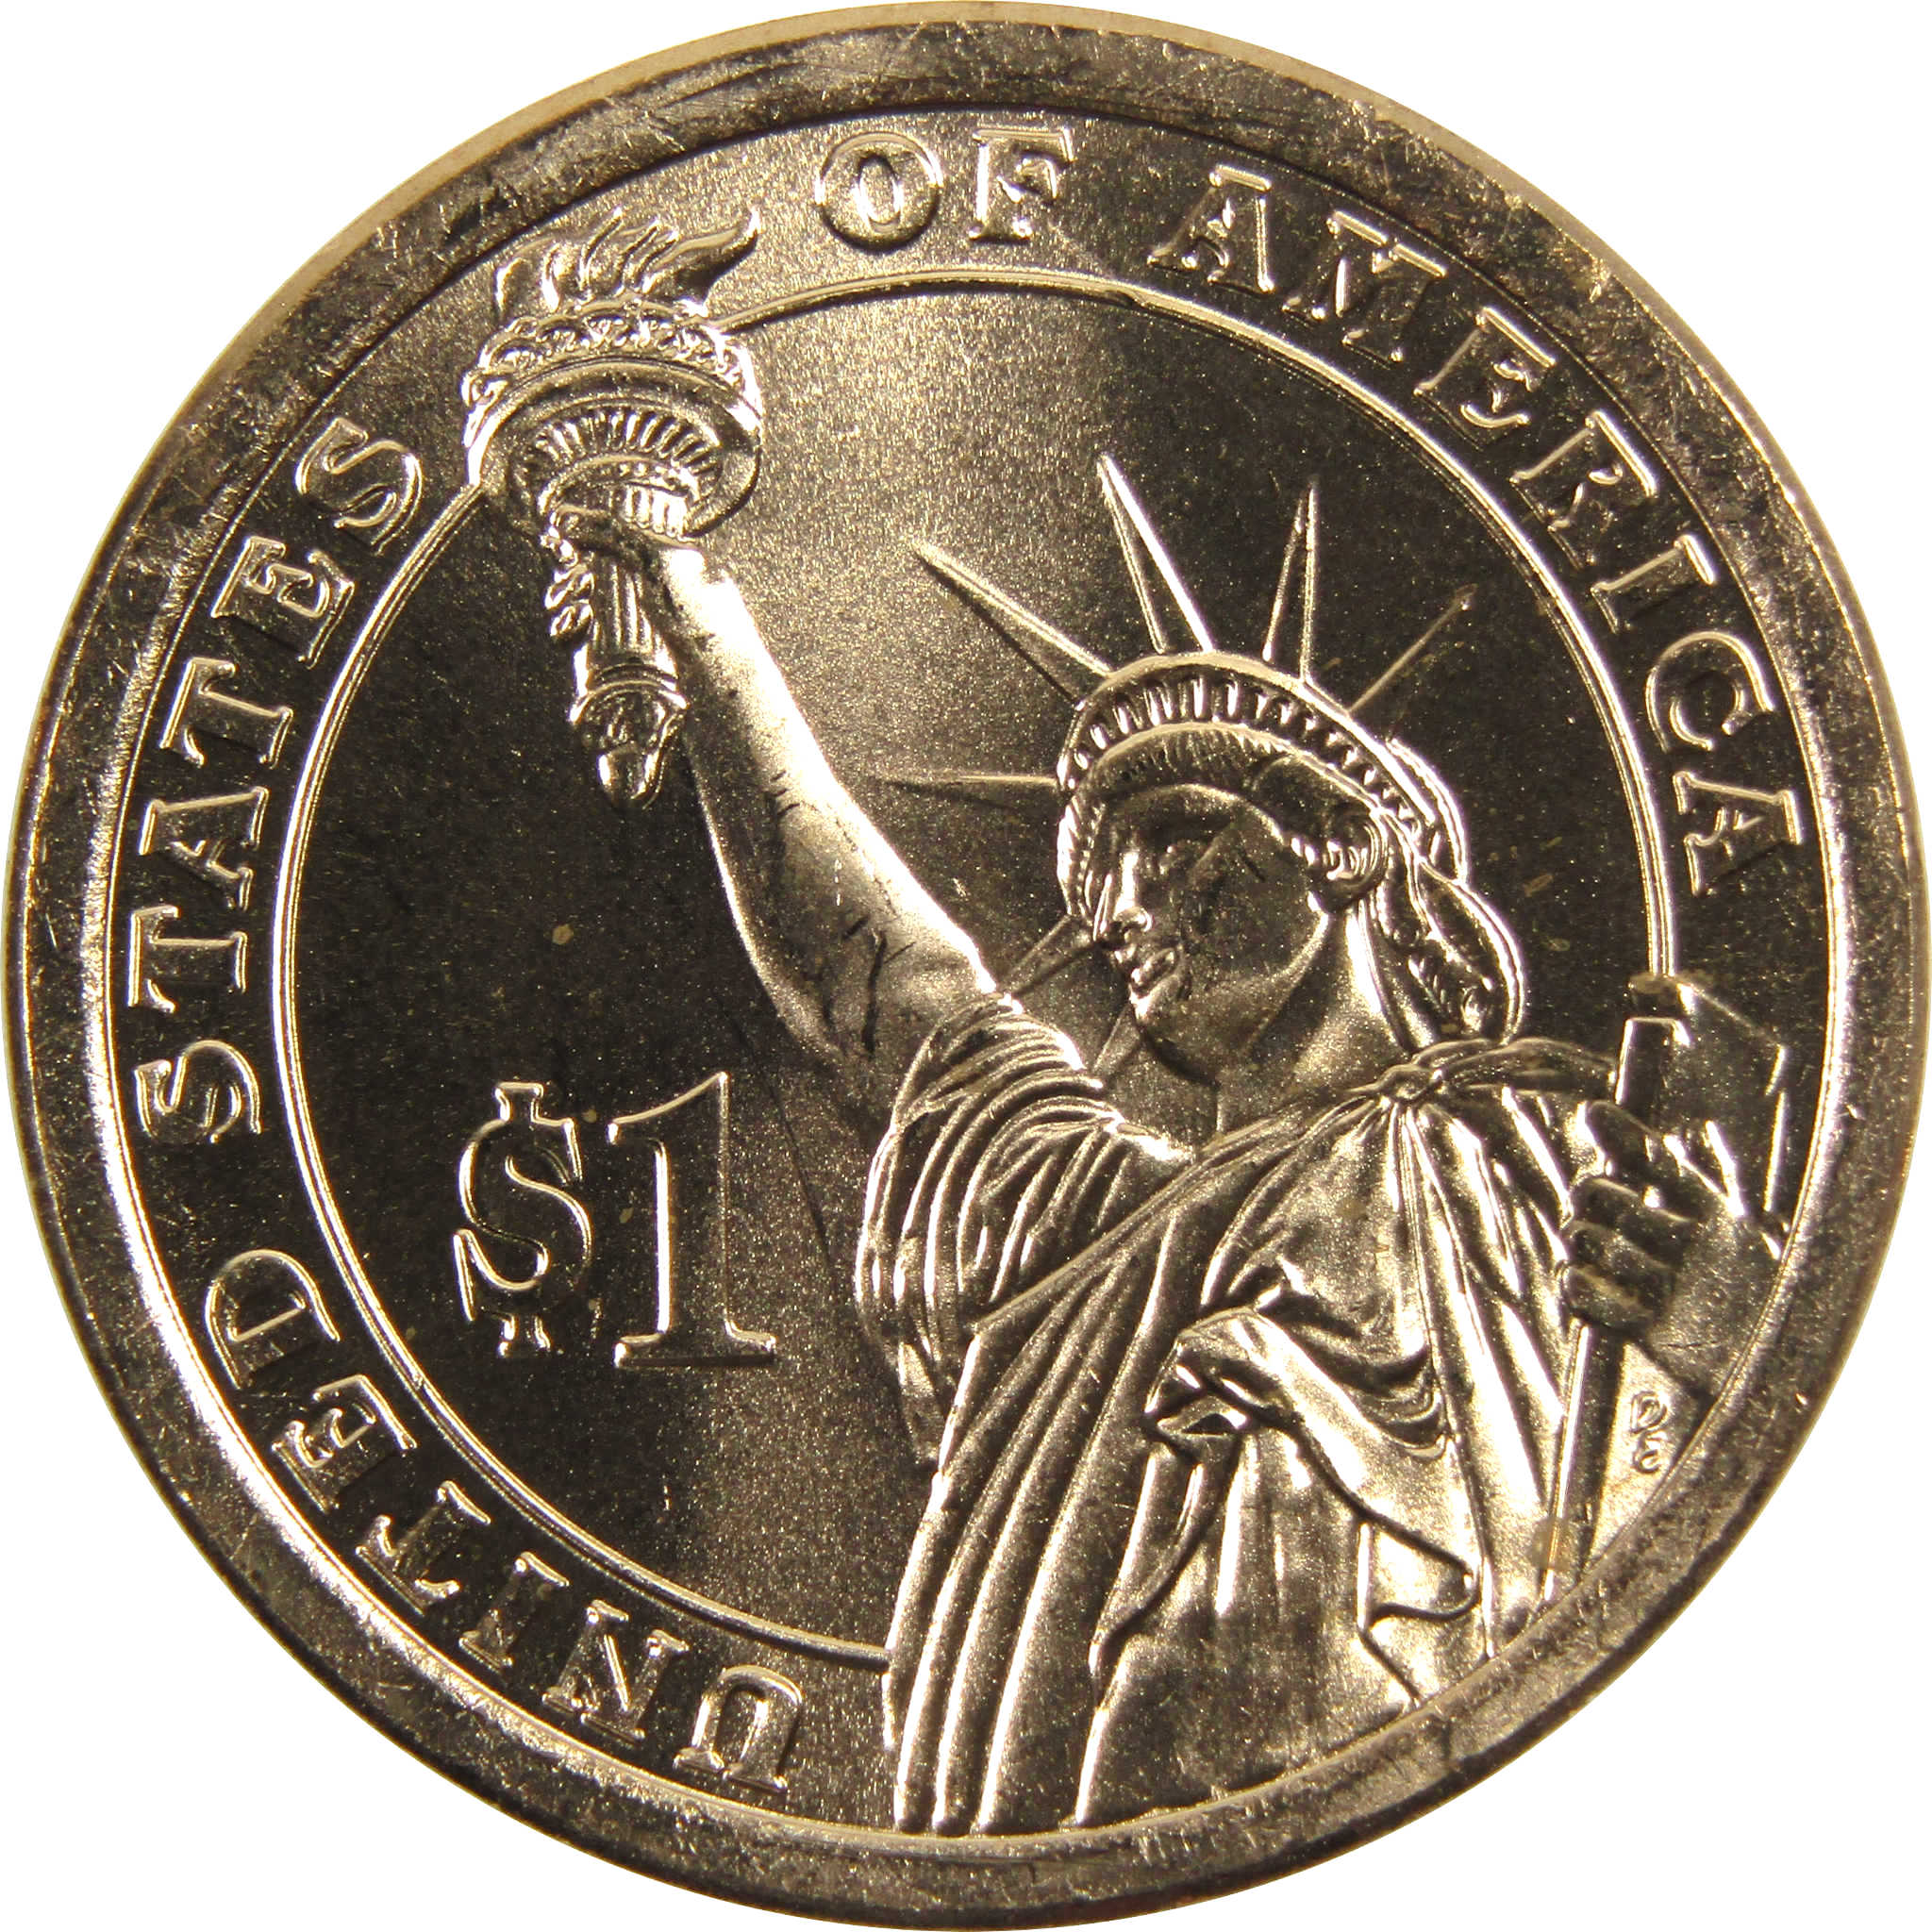 2015 D Harry S Truman Presidential Dollar BU Uncirculated $1 Coin